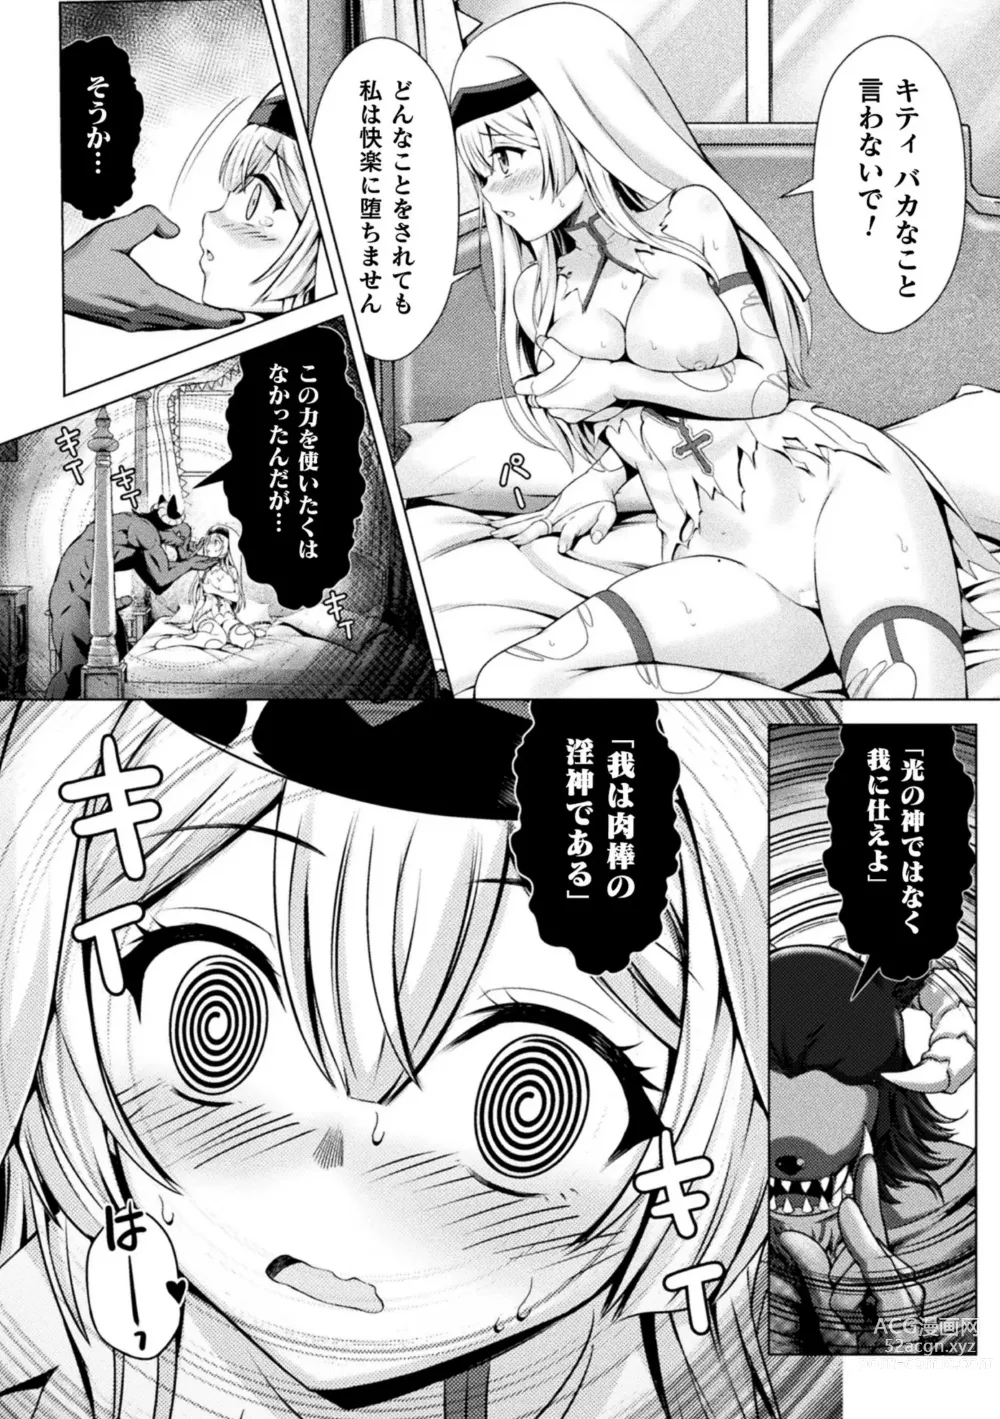 Page 15 of manga Kukkoro Heroines Vol. 30